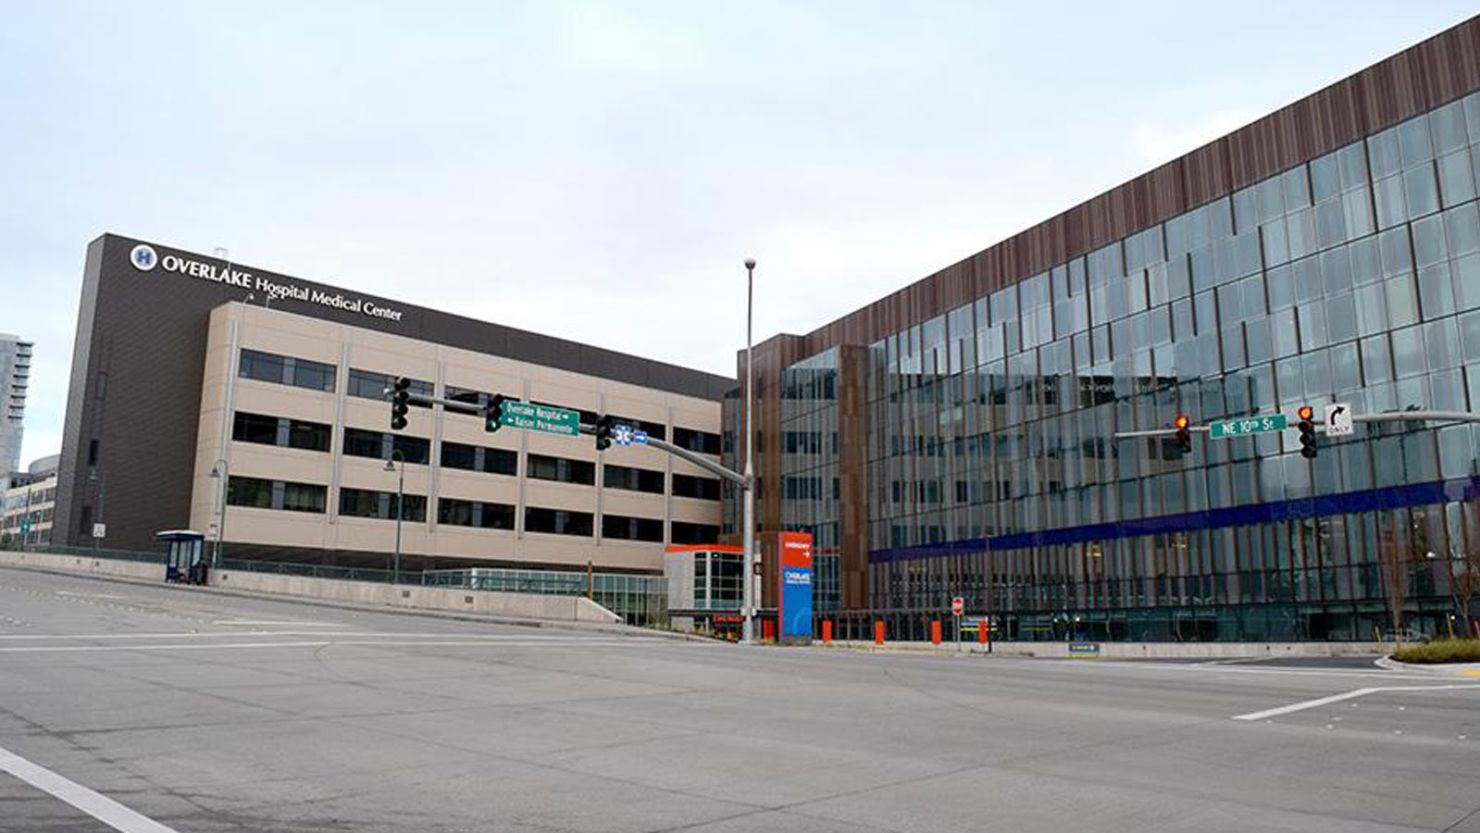 The Overlake Medical Center in Bellevue, Washington